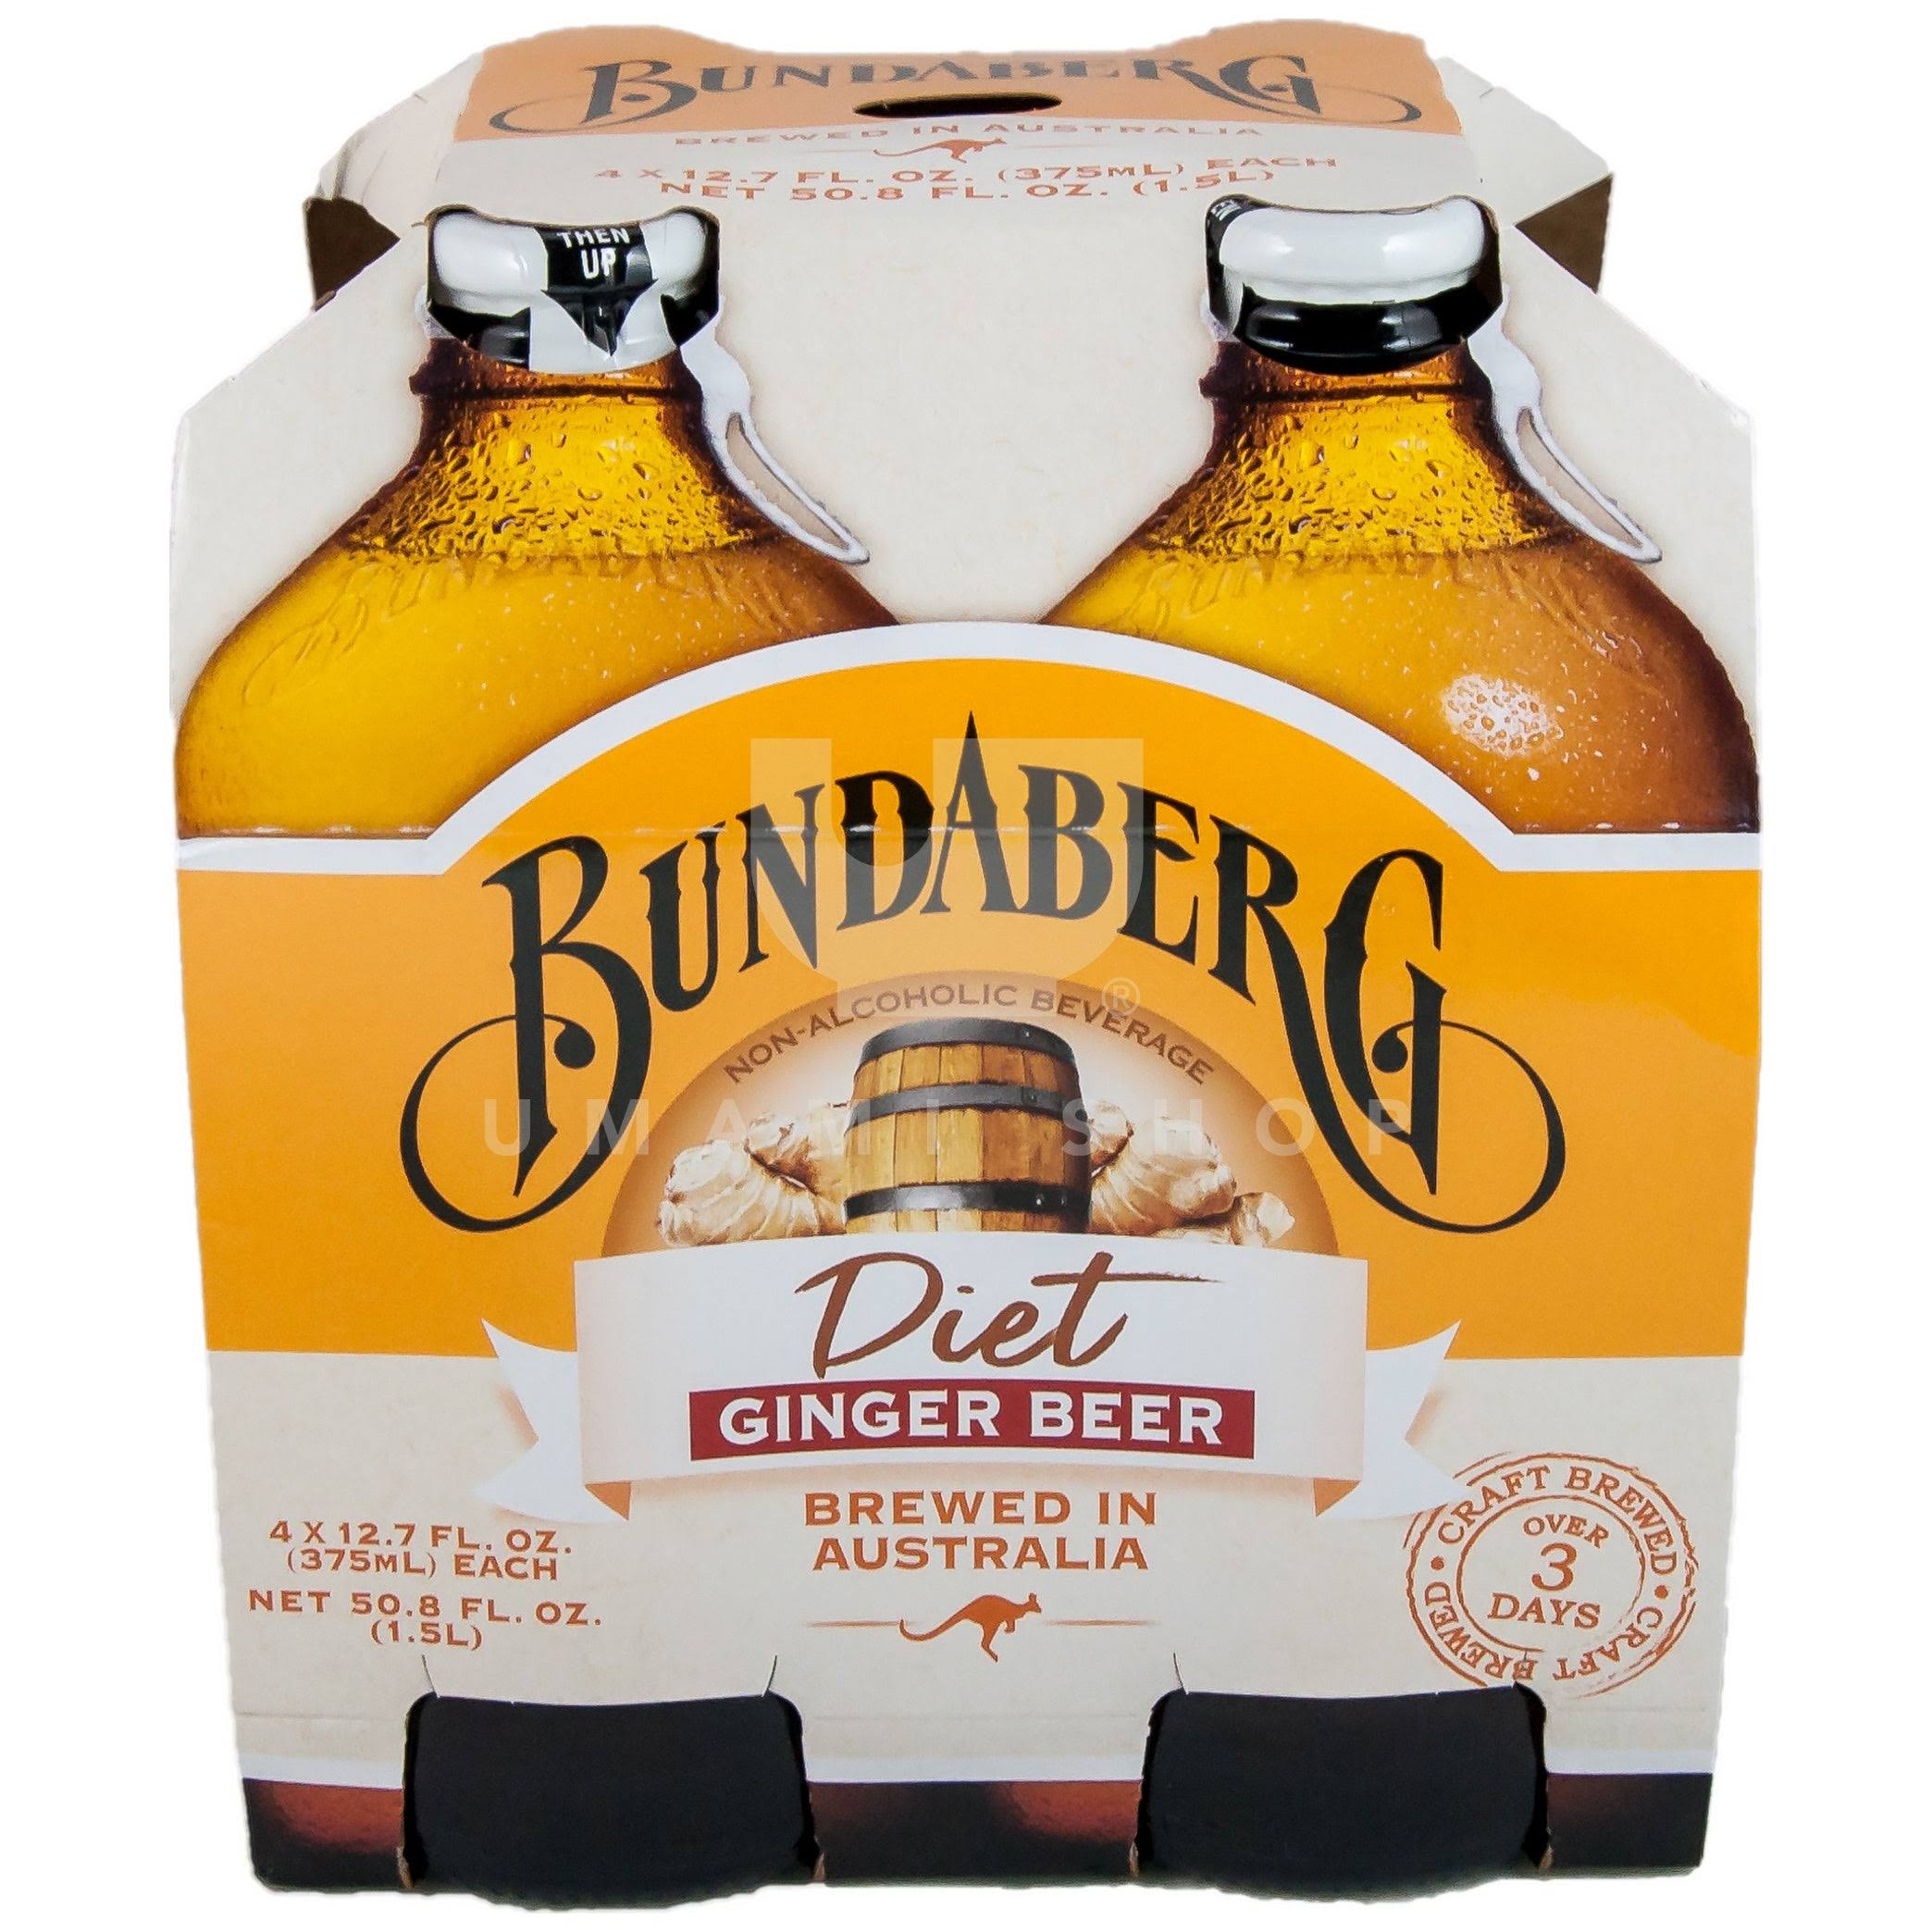 Bundaberg Ginger Beer, Diet - 4 x 12.7 fl oz (375 ml) bottles [50.8 fl oz (1.5 l)]